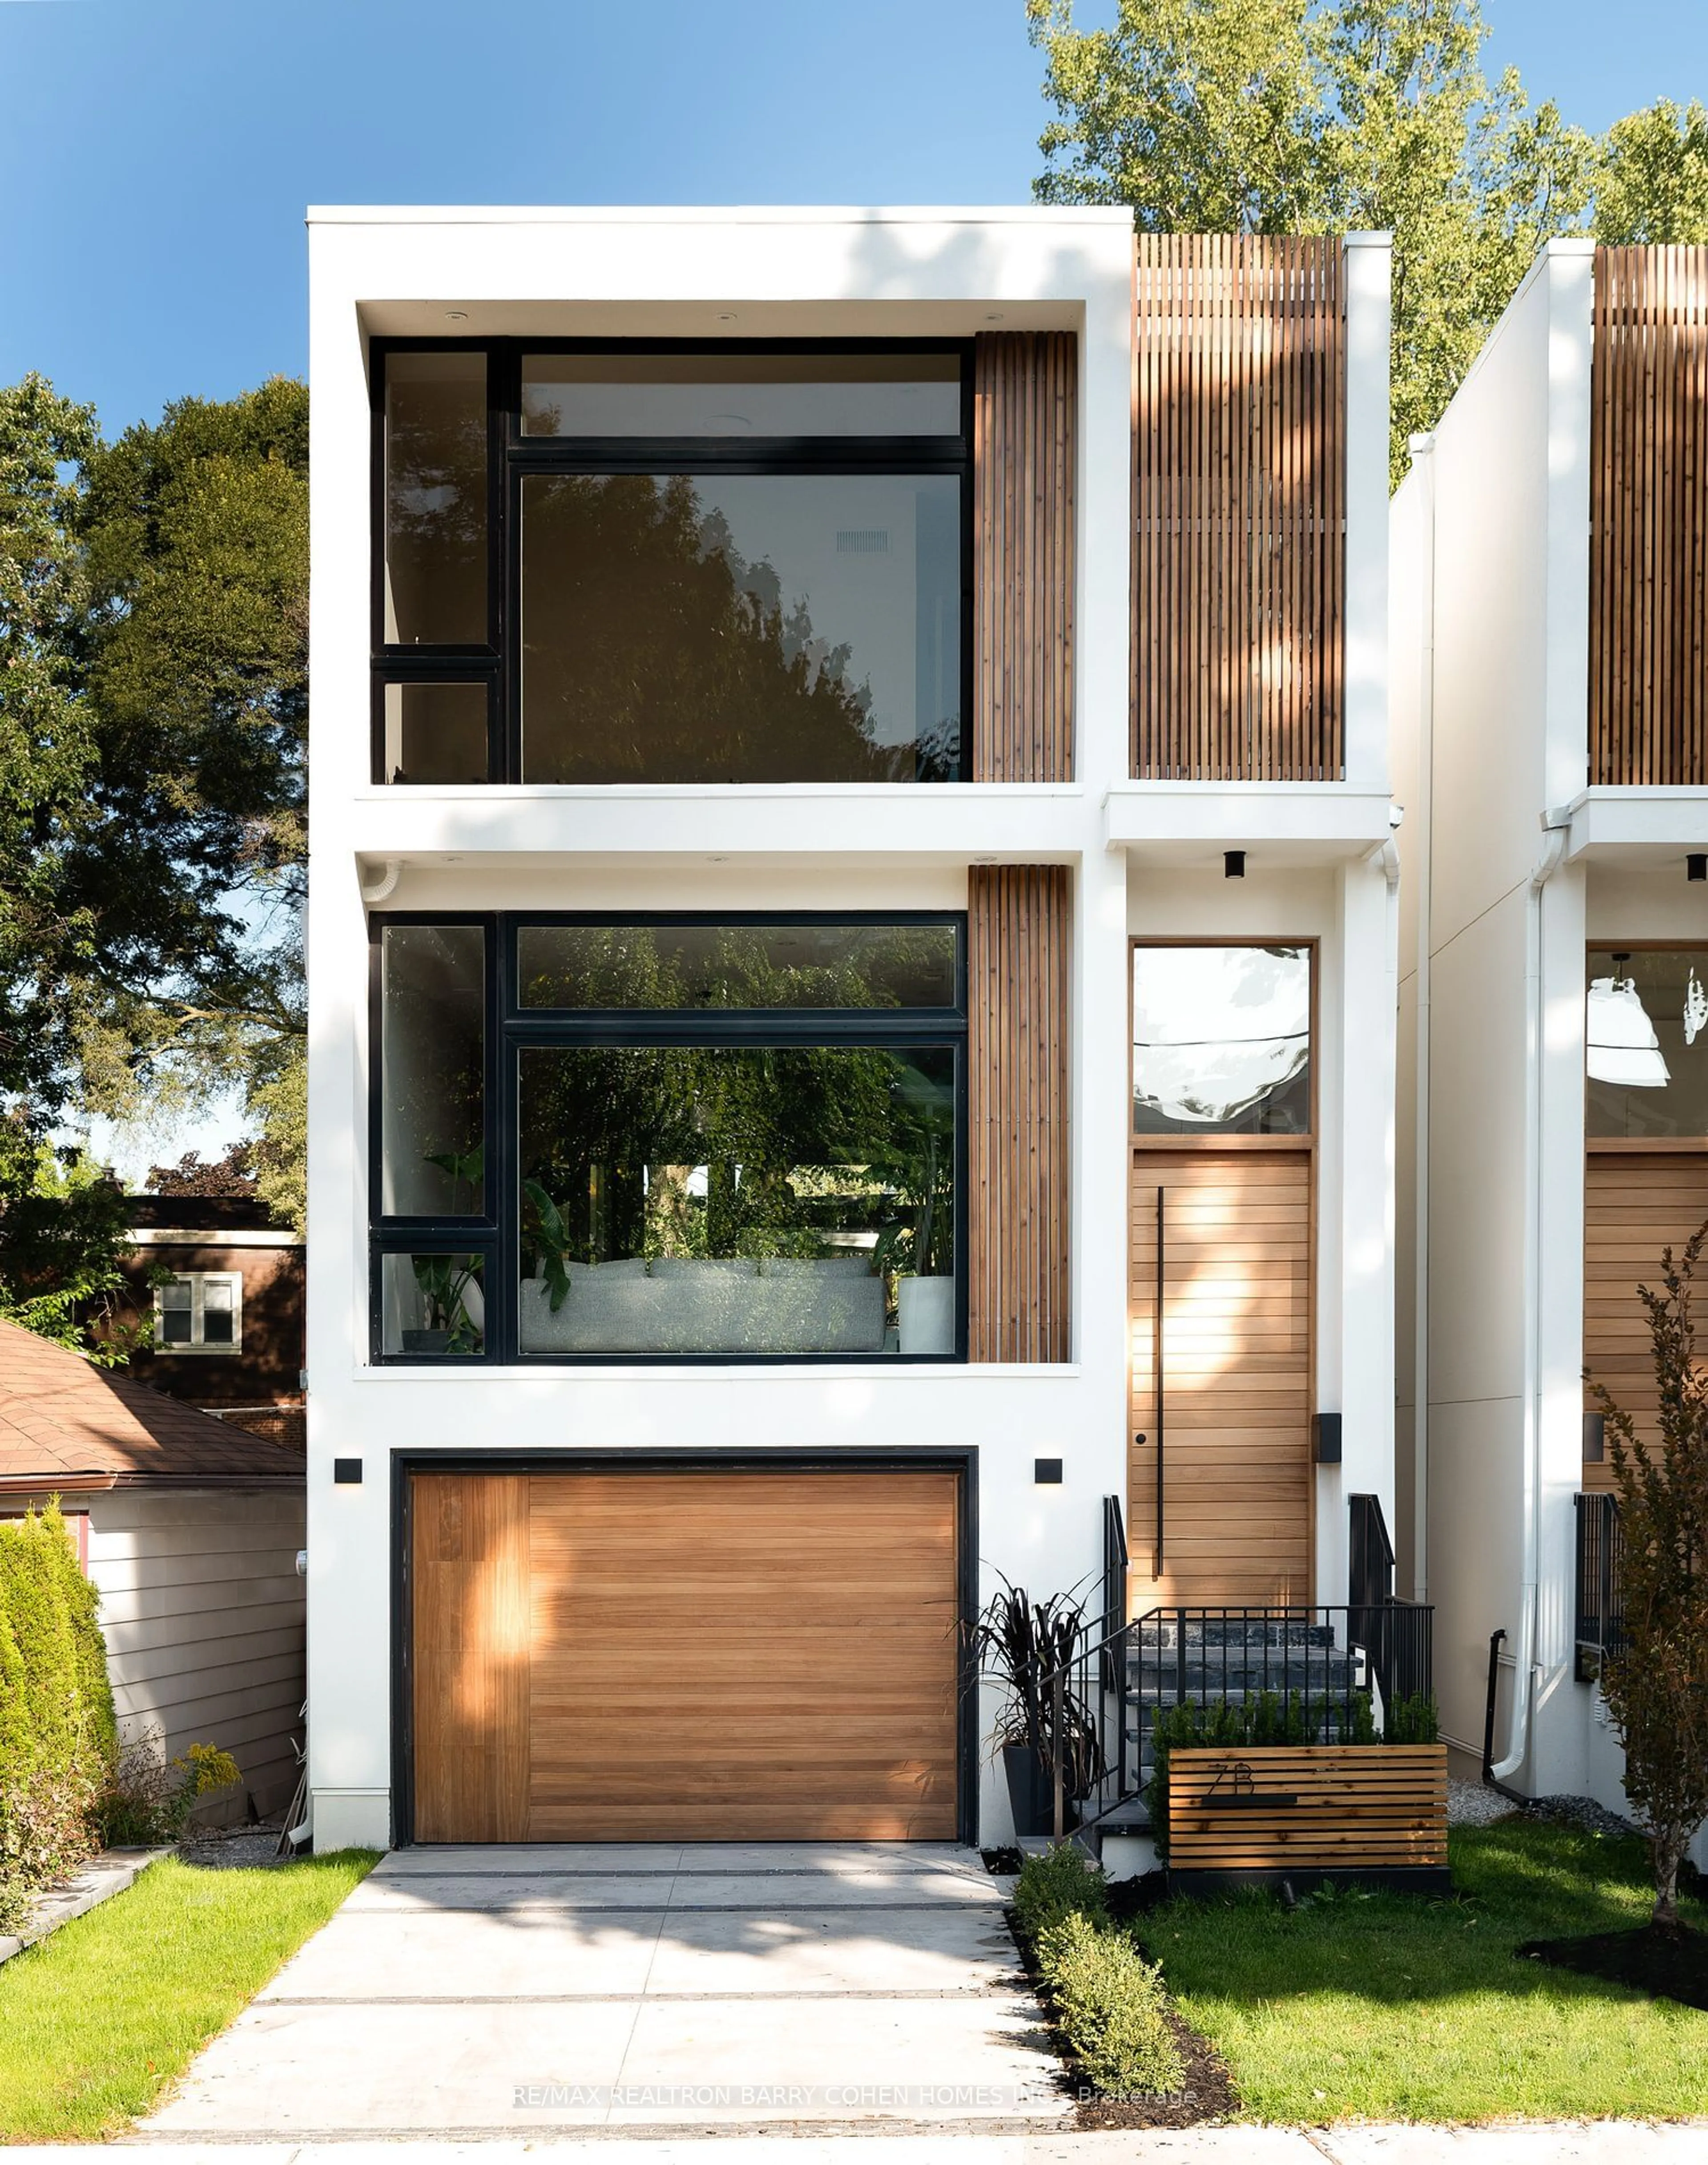 Home with stucco exterior material for 7B Maughan Cres, Toronto Ontario M4L 3E4